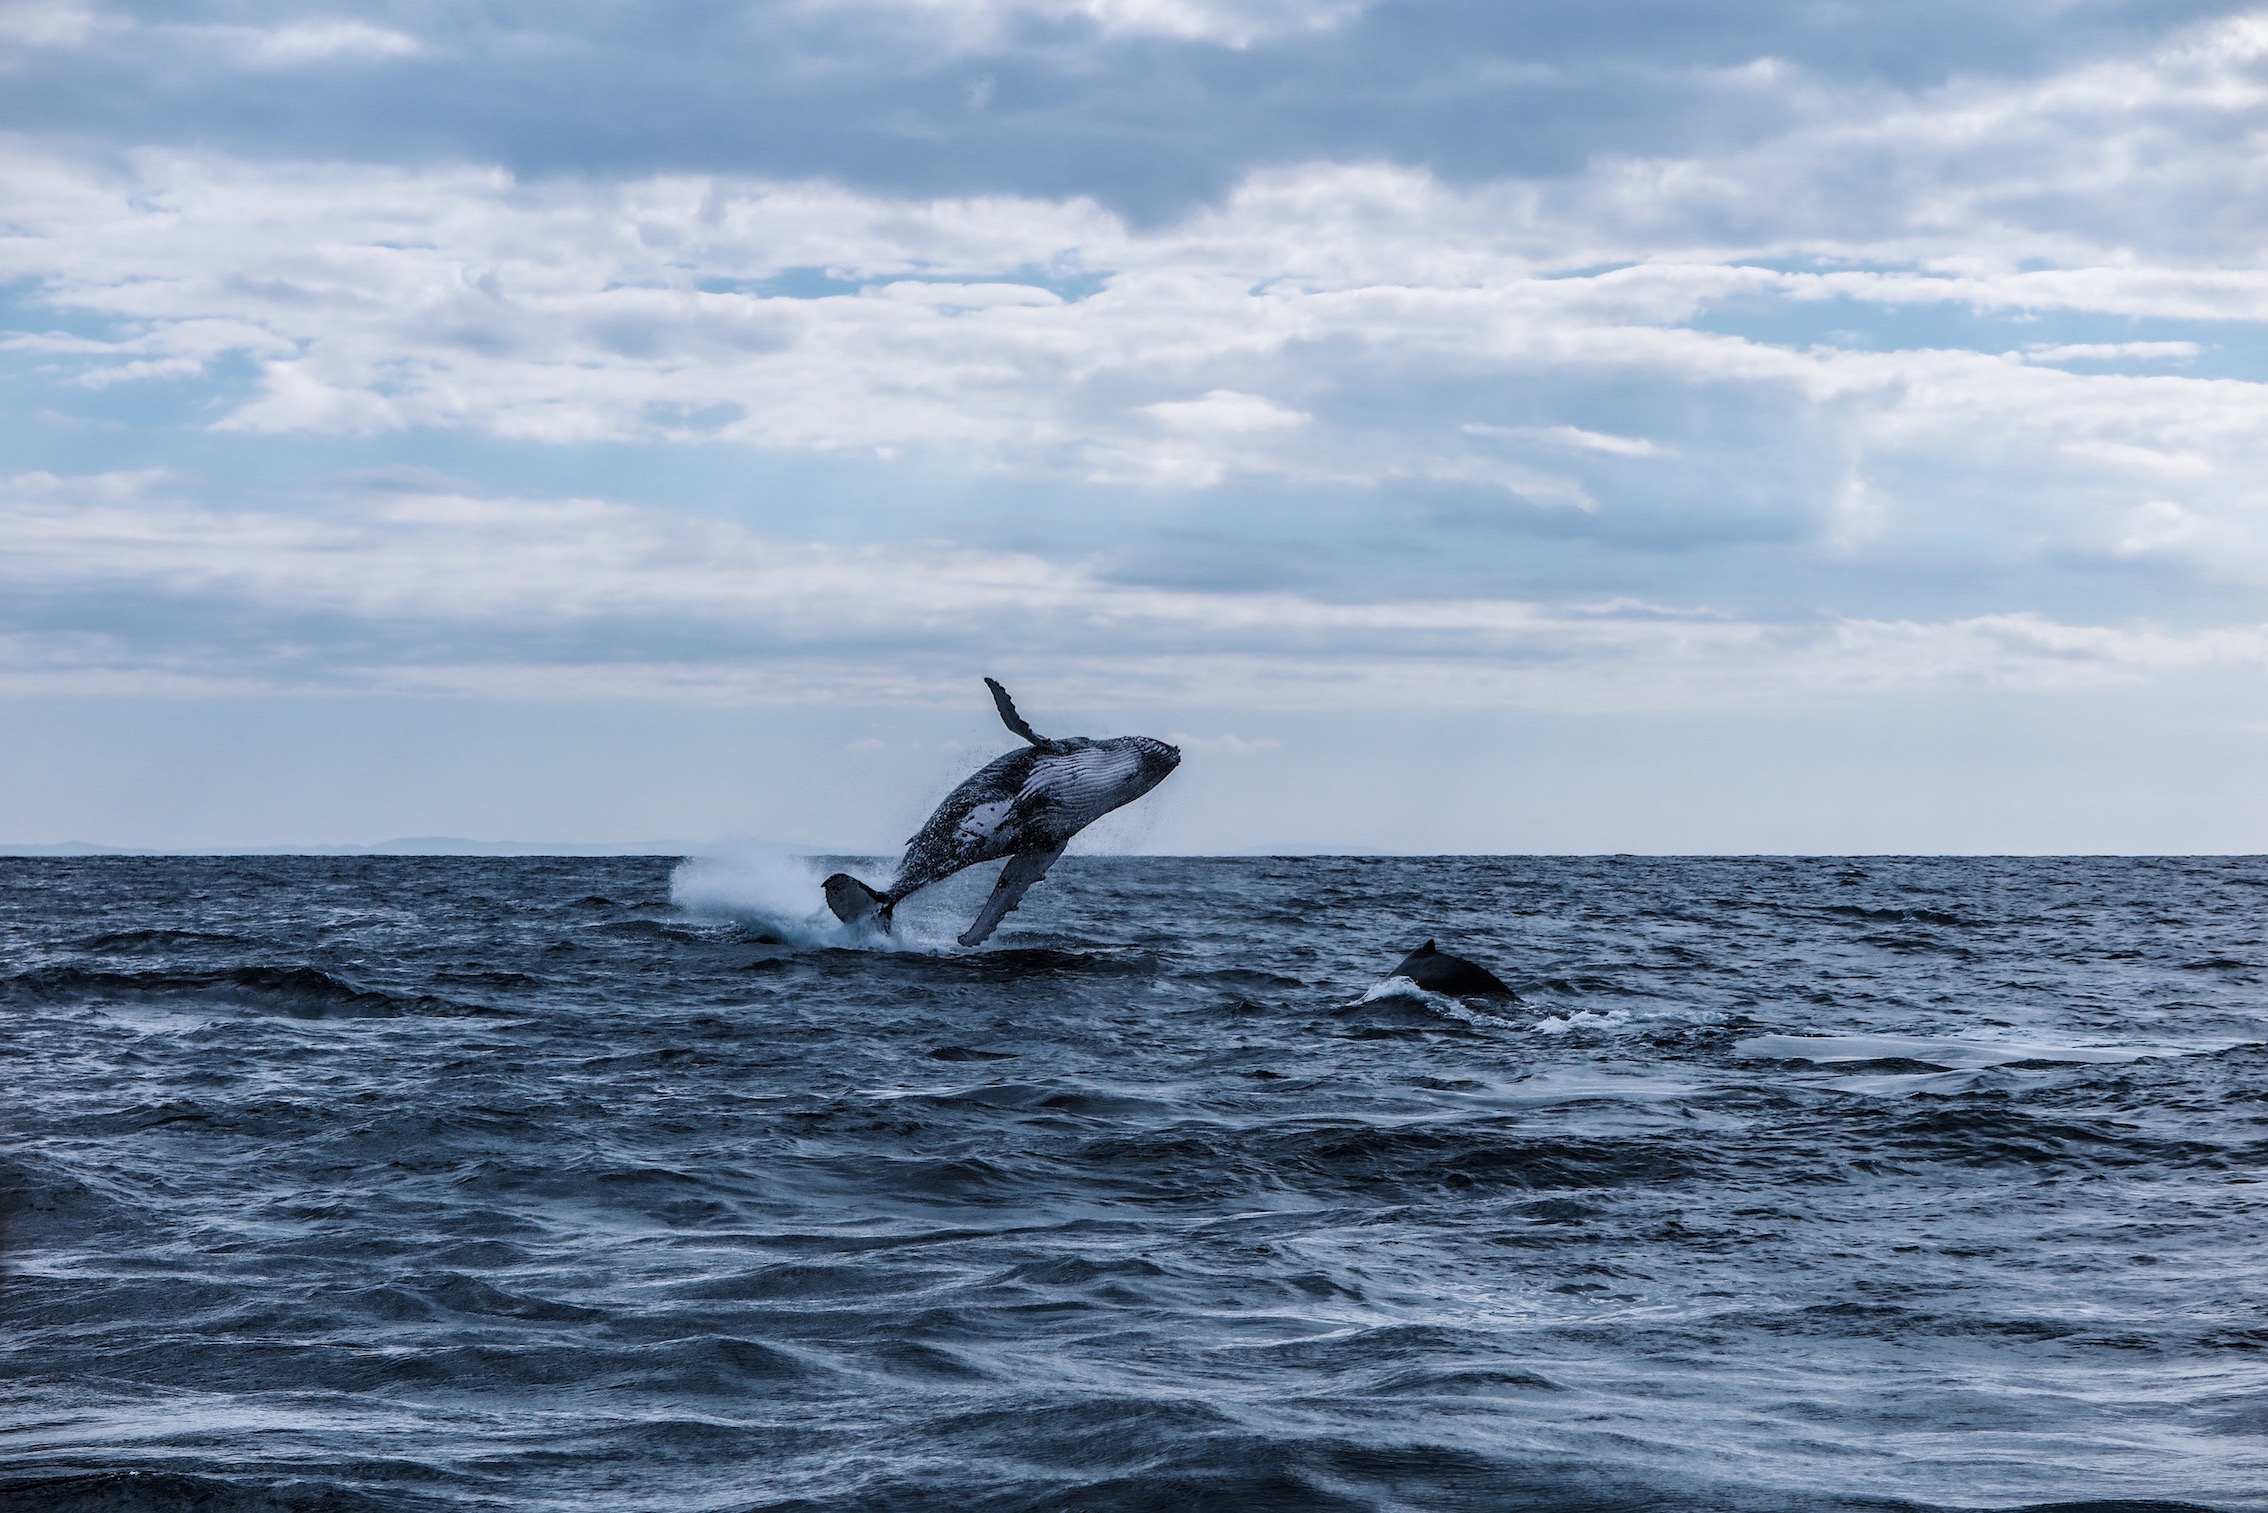 The Humpback Whale East Coast Migration